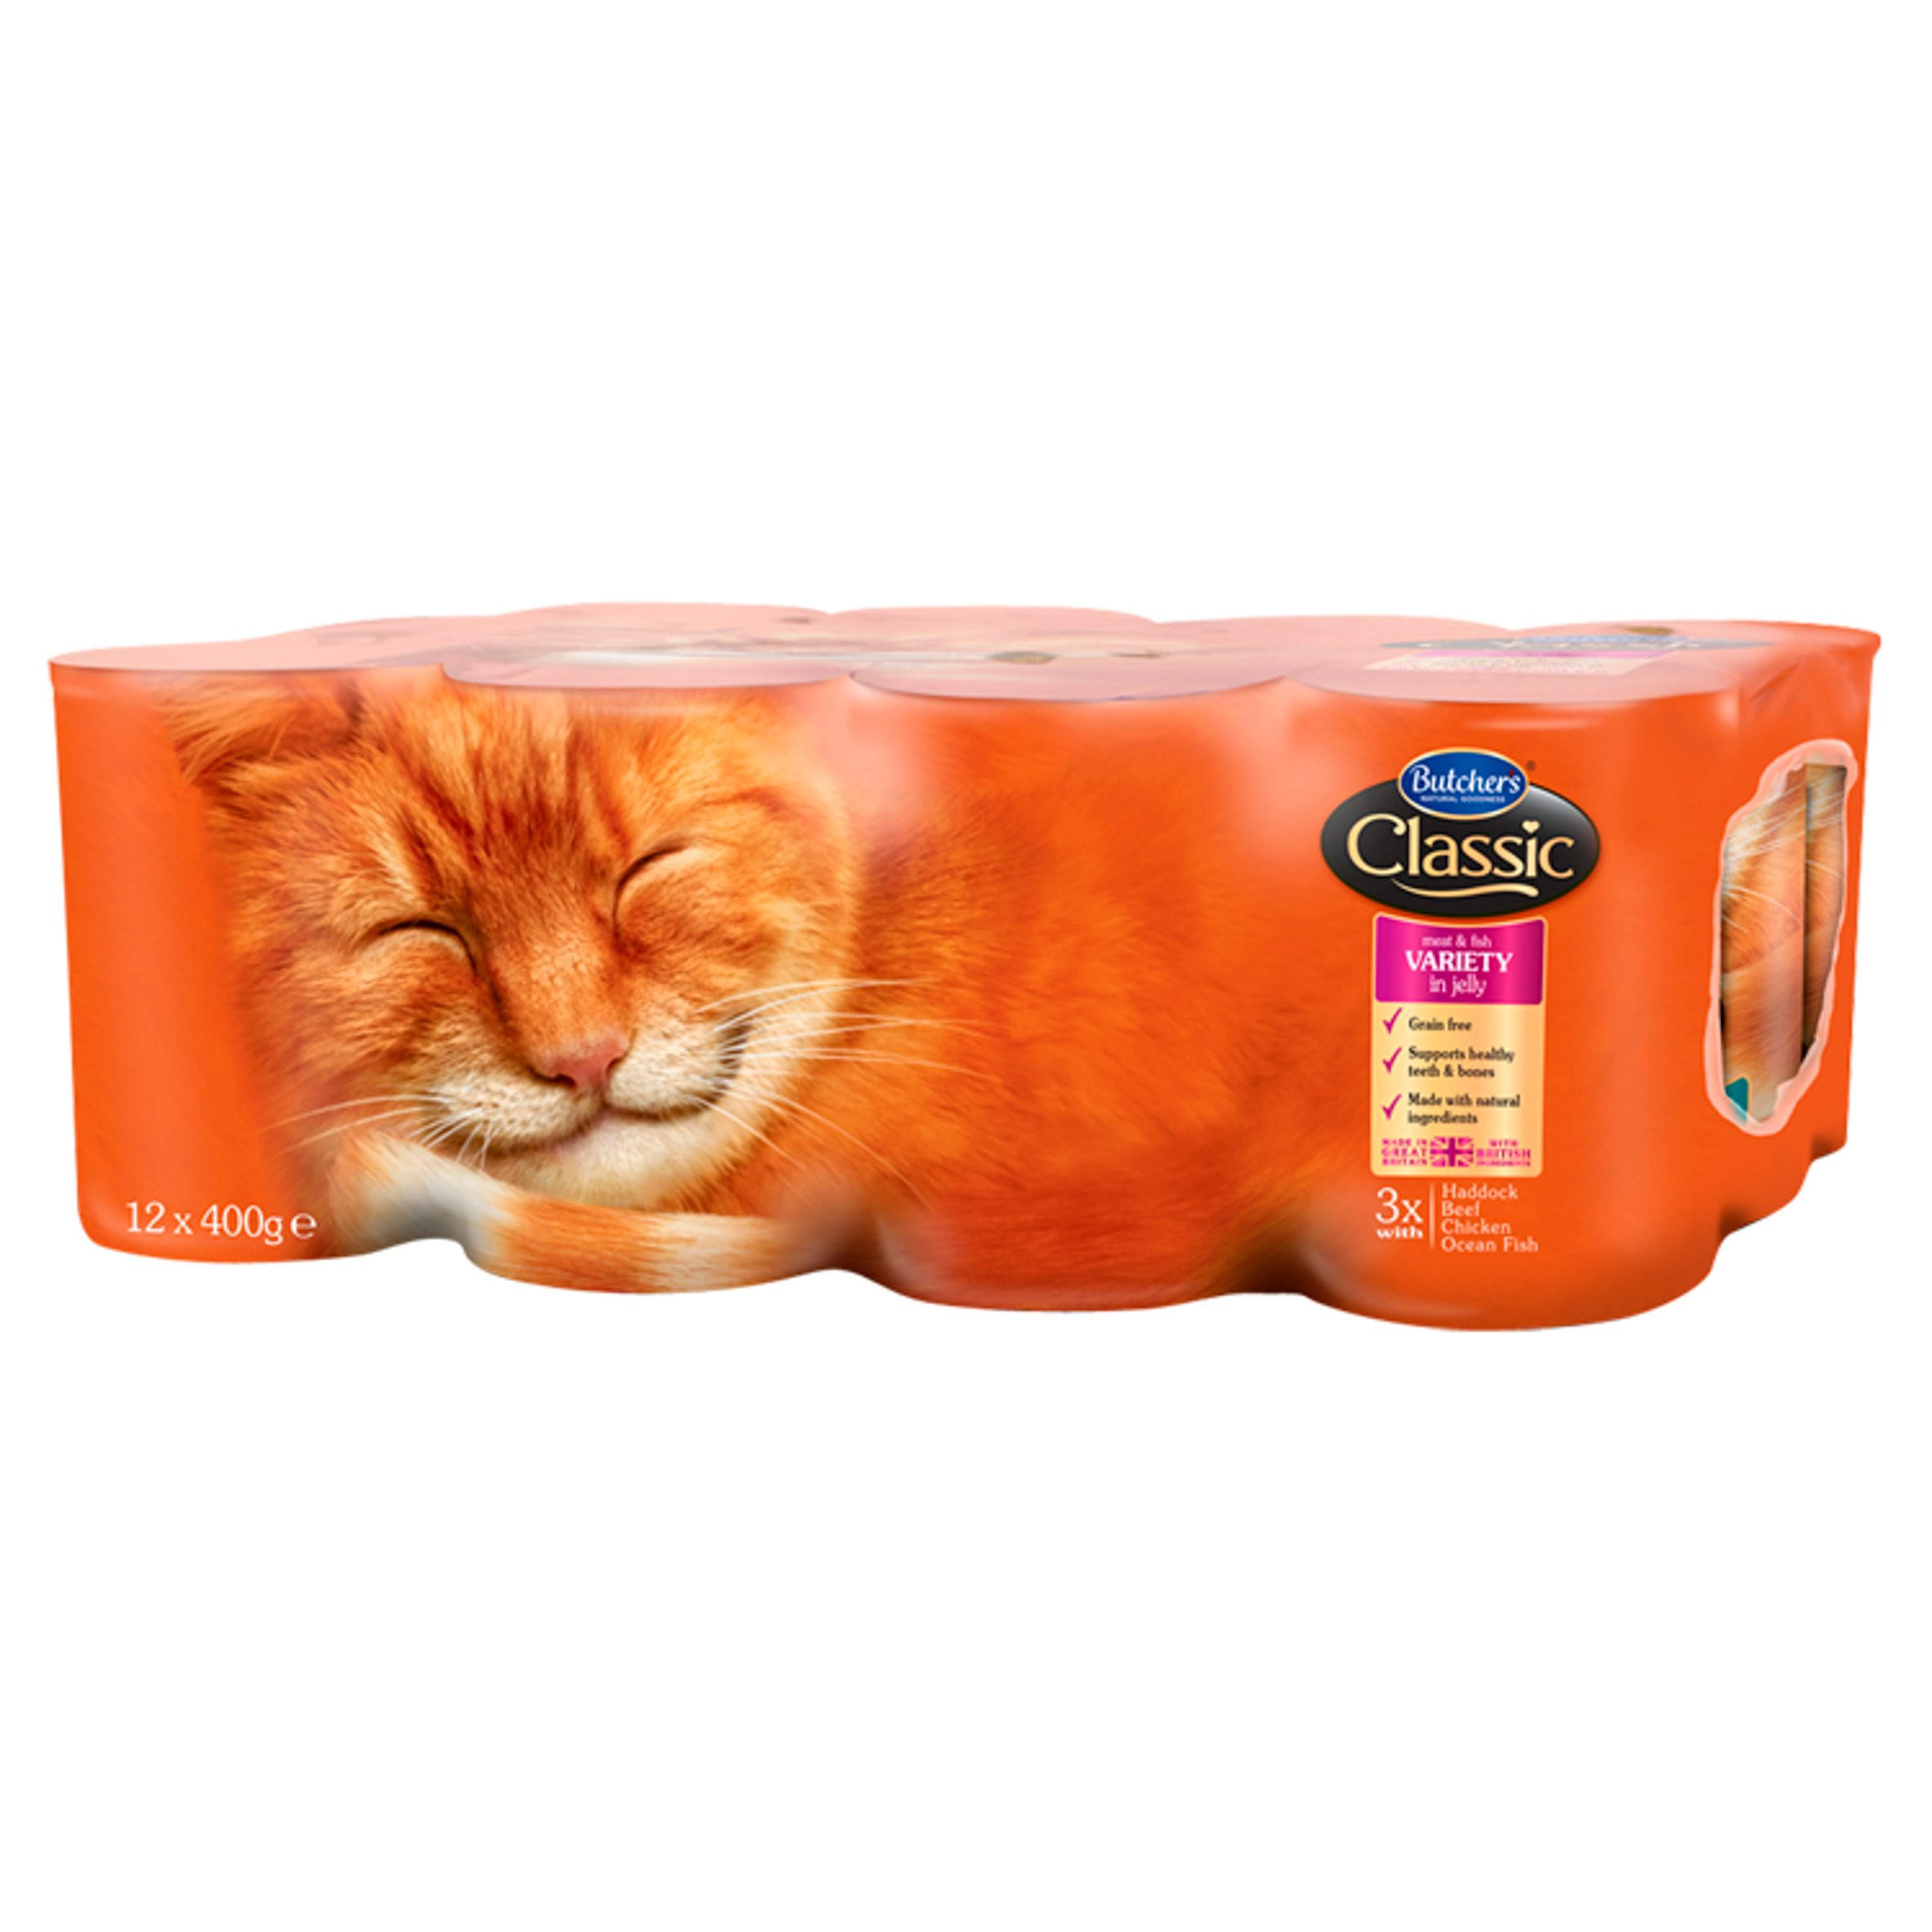 Jelly Cat Food Tins 12 x 400g 